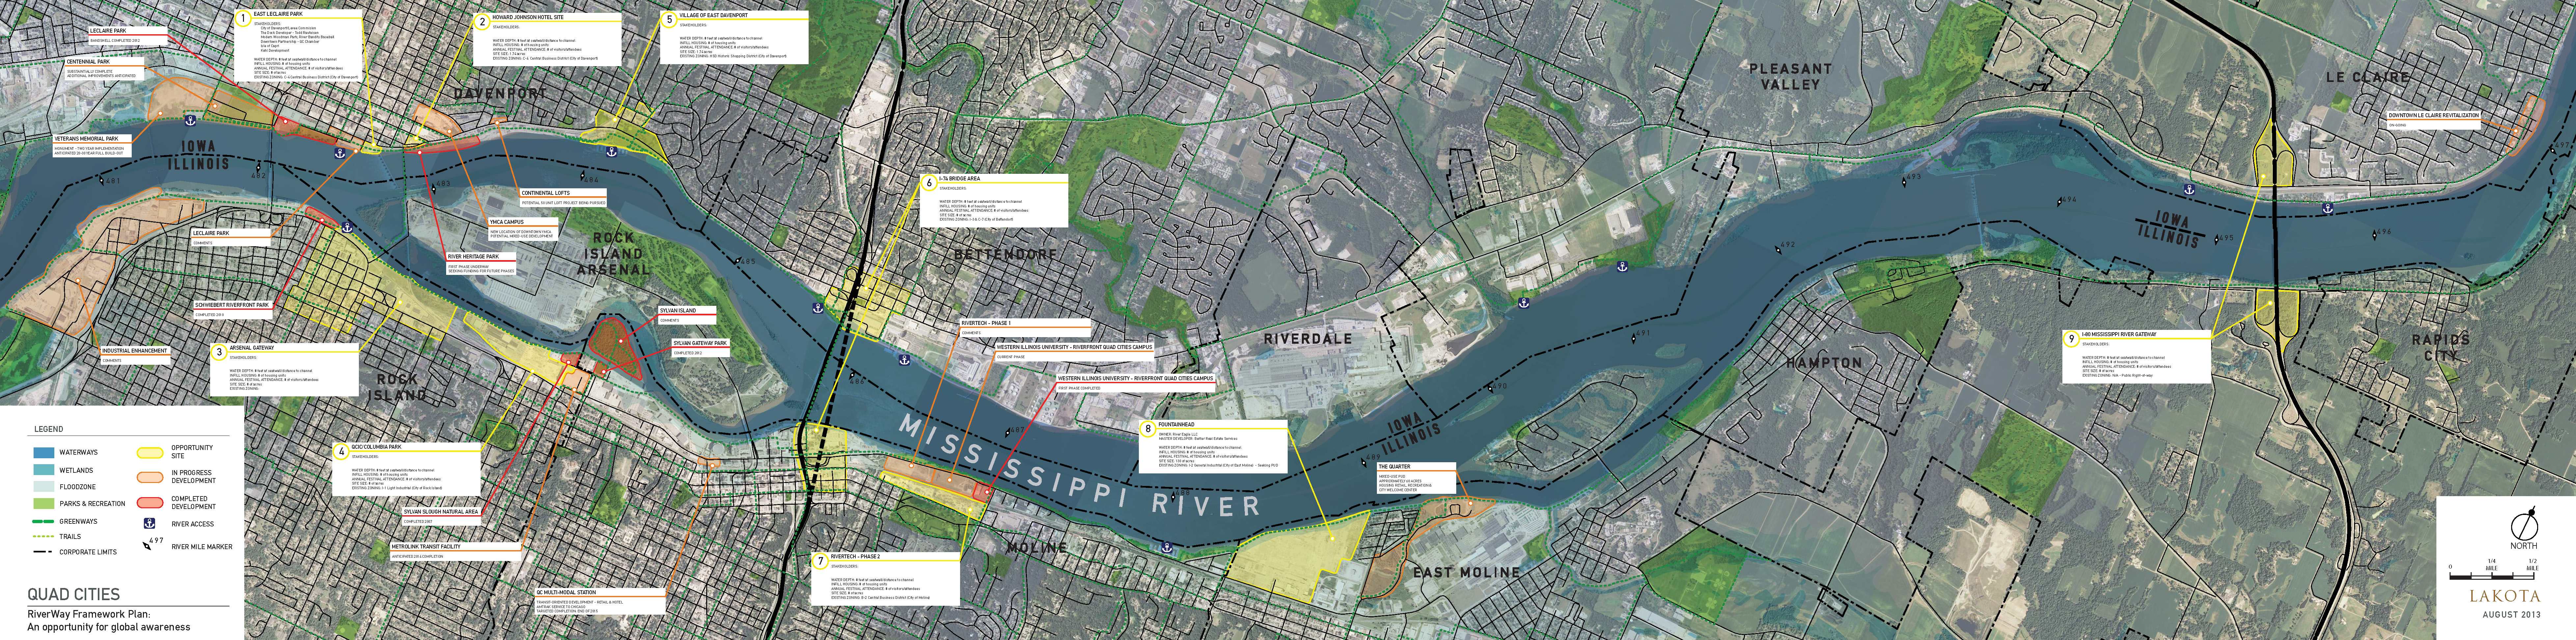 Riverfront Development Opportunities